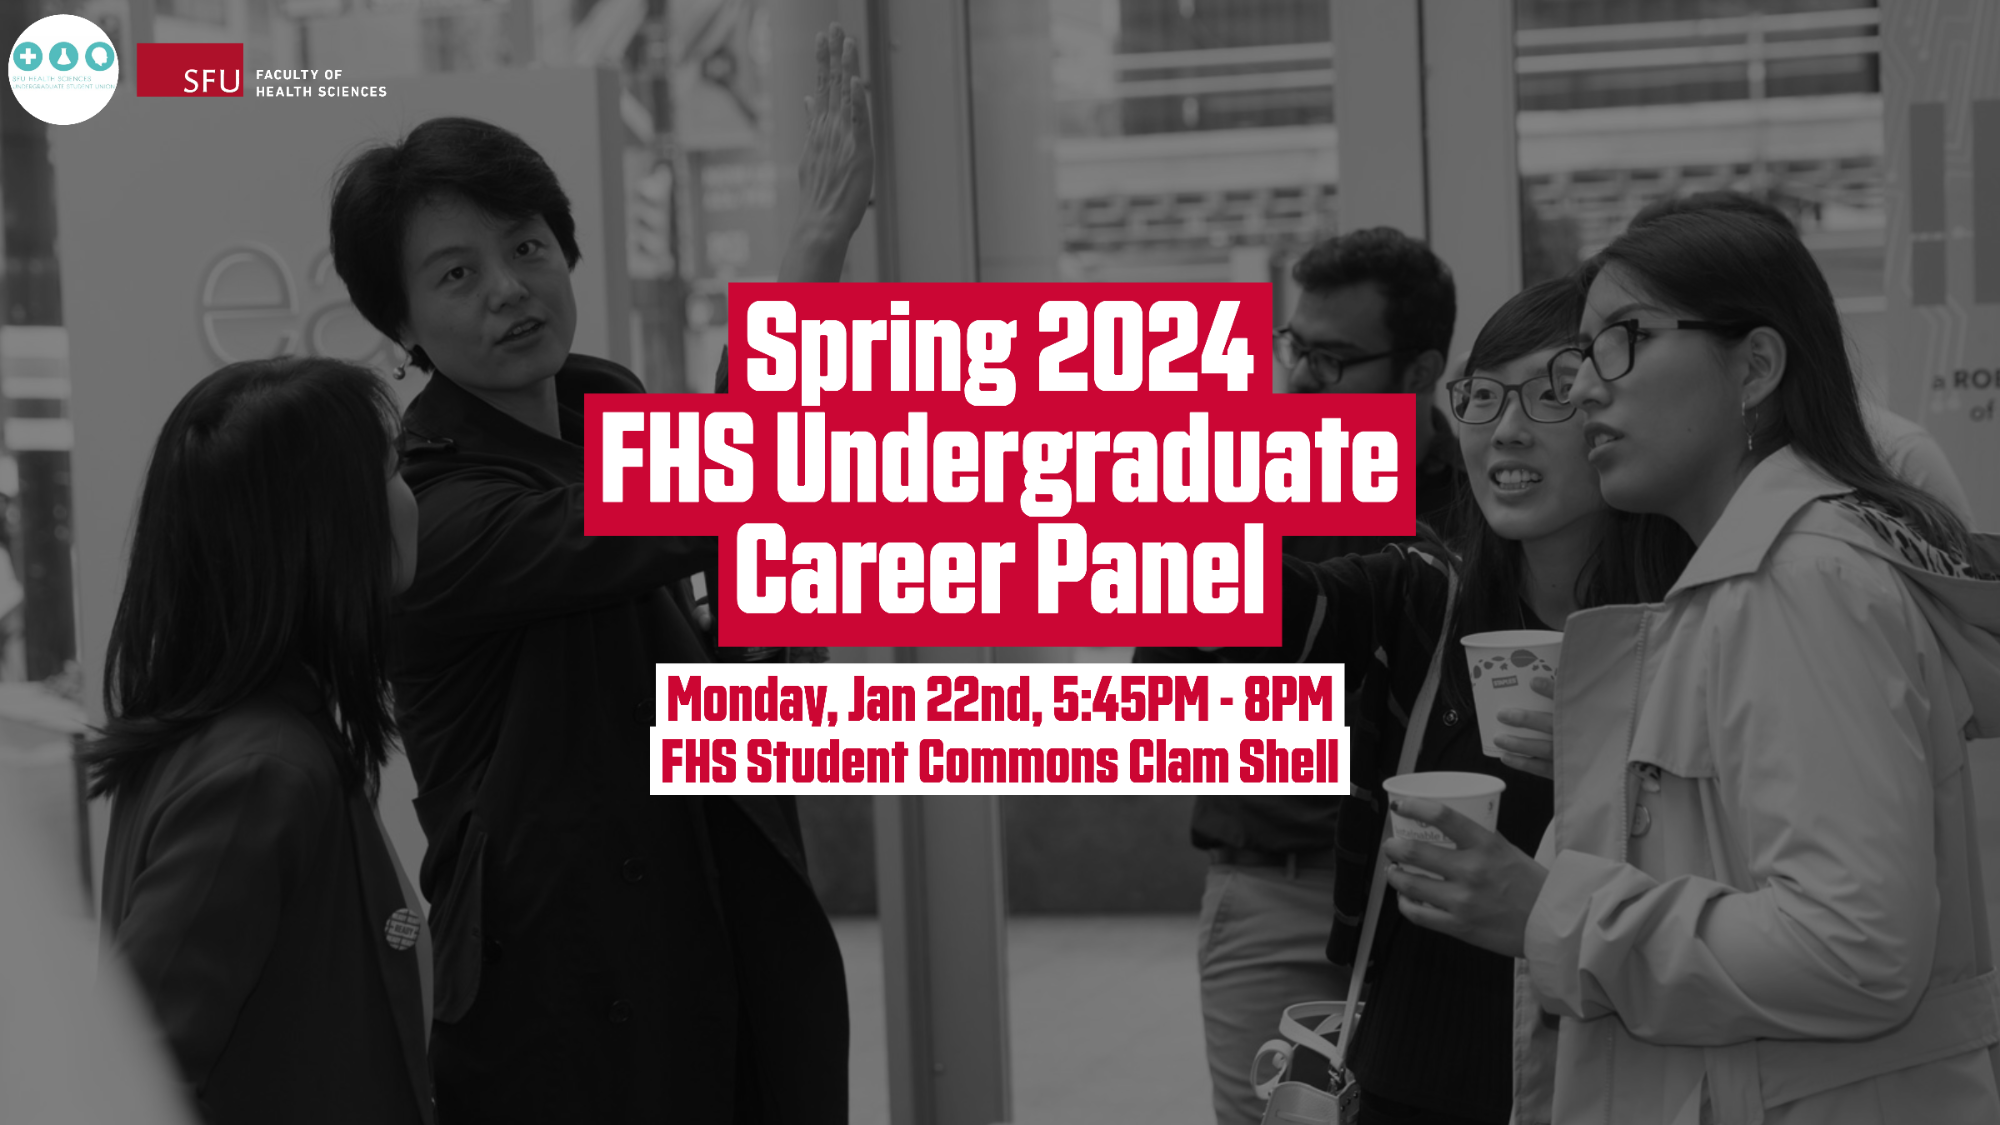 Monday, Jan 22: Undergraduate Career Panel